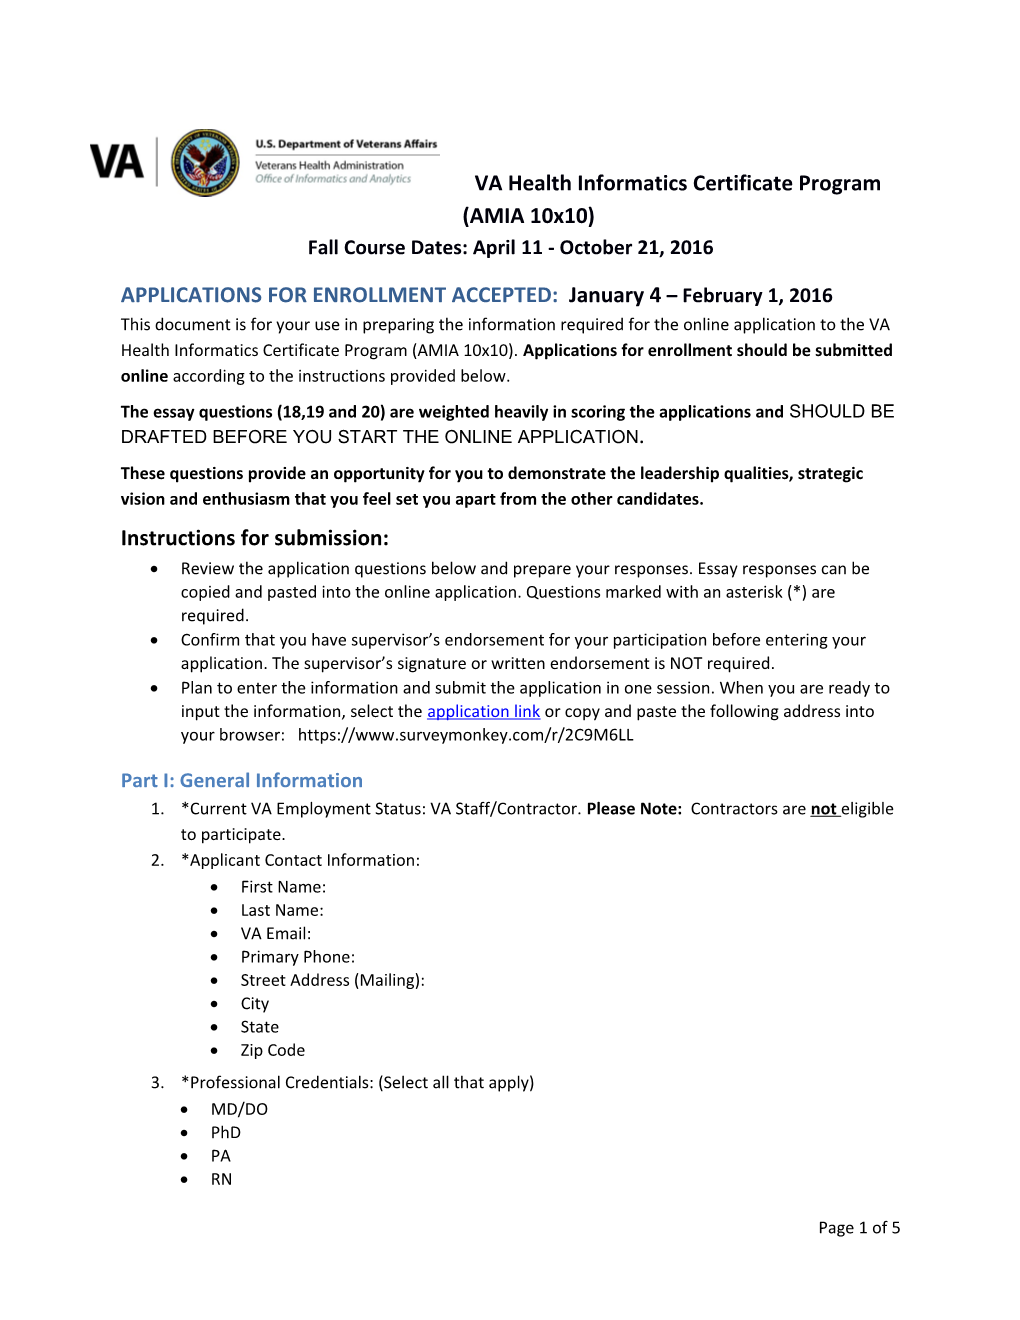 VA Health Informatics Certificate Program (AMIA 10X10)